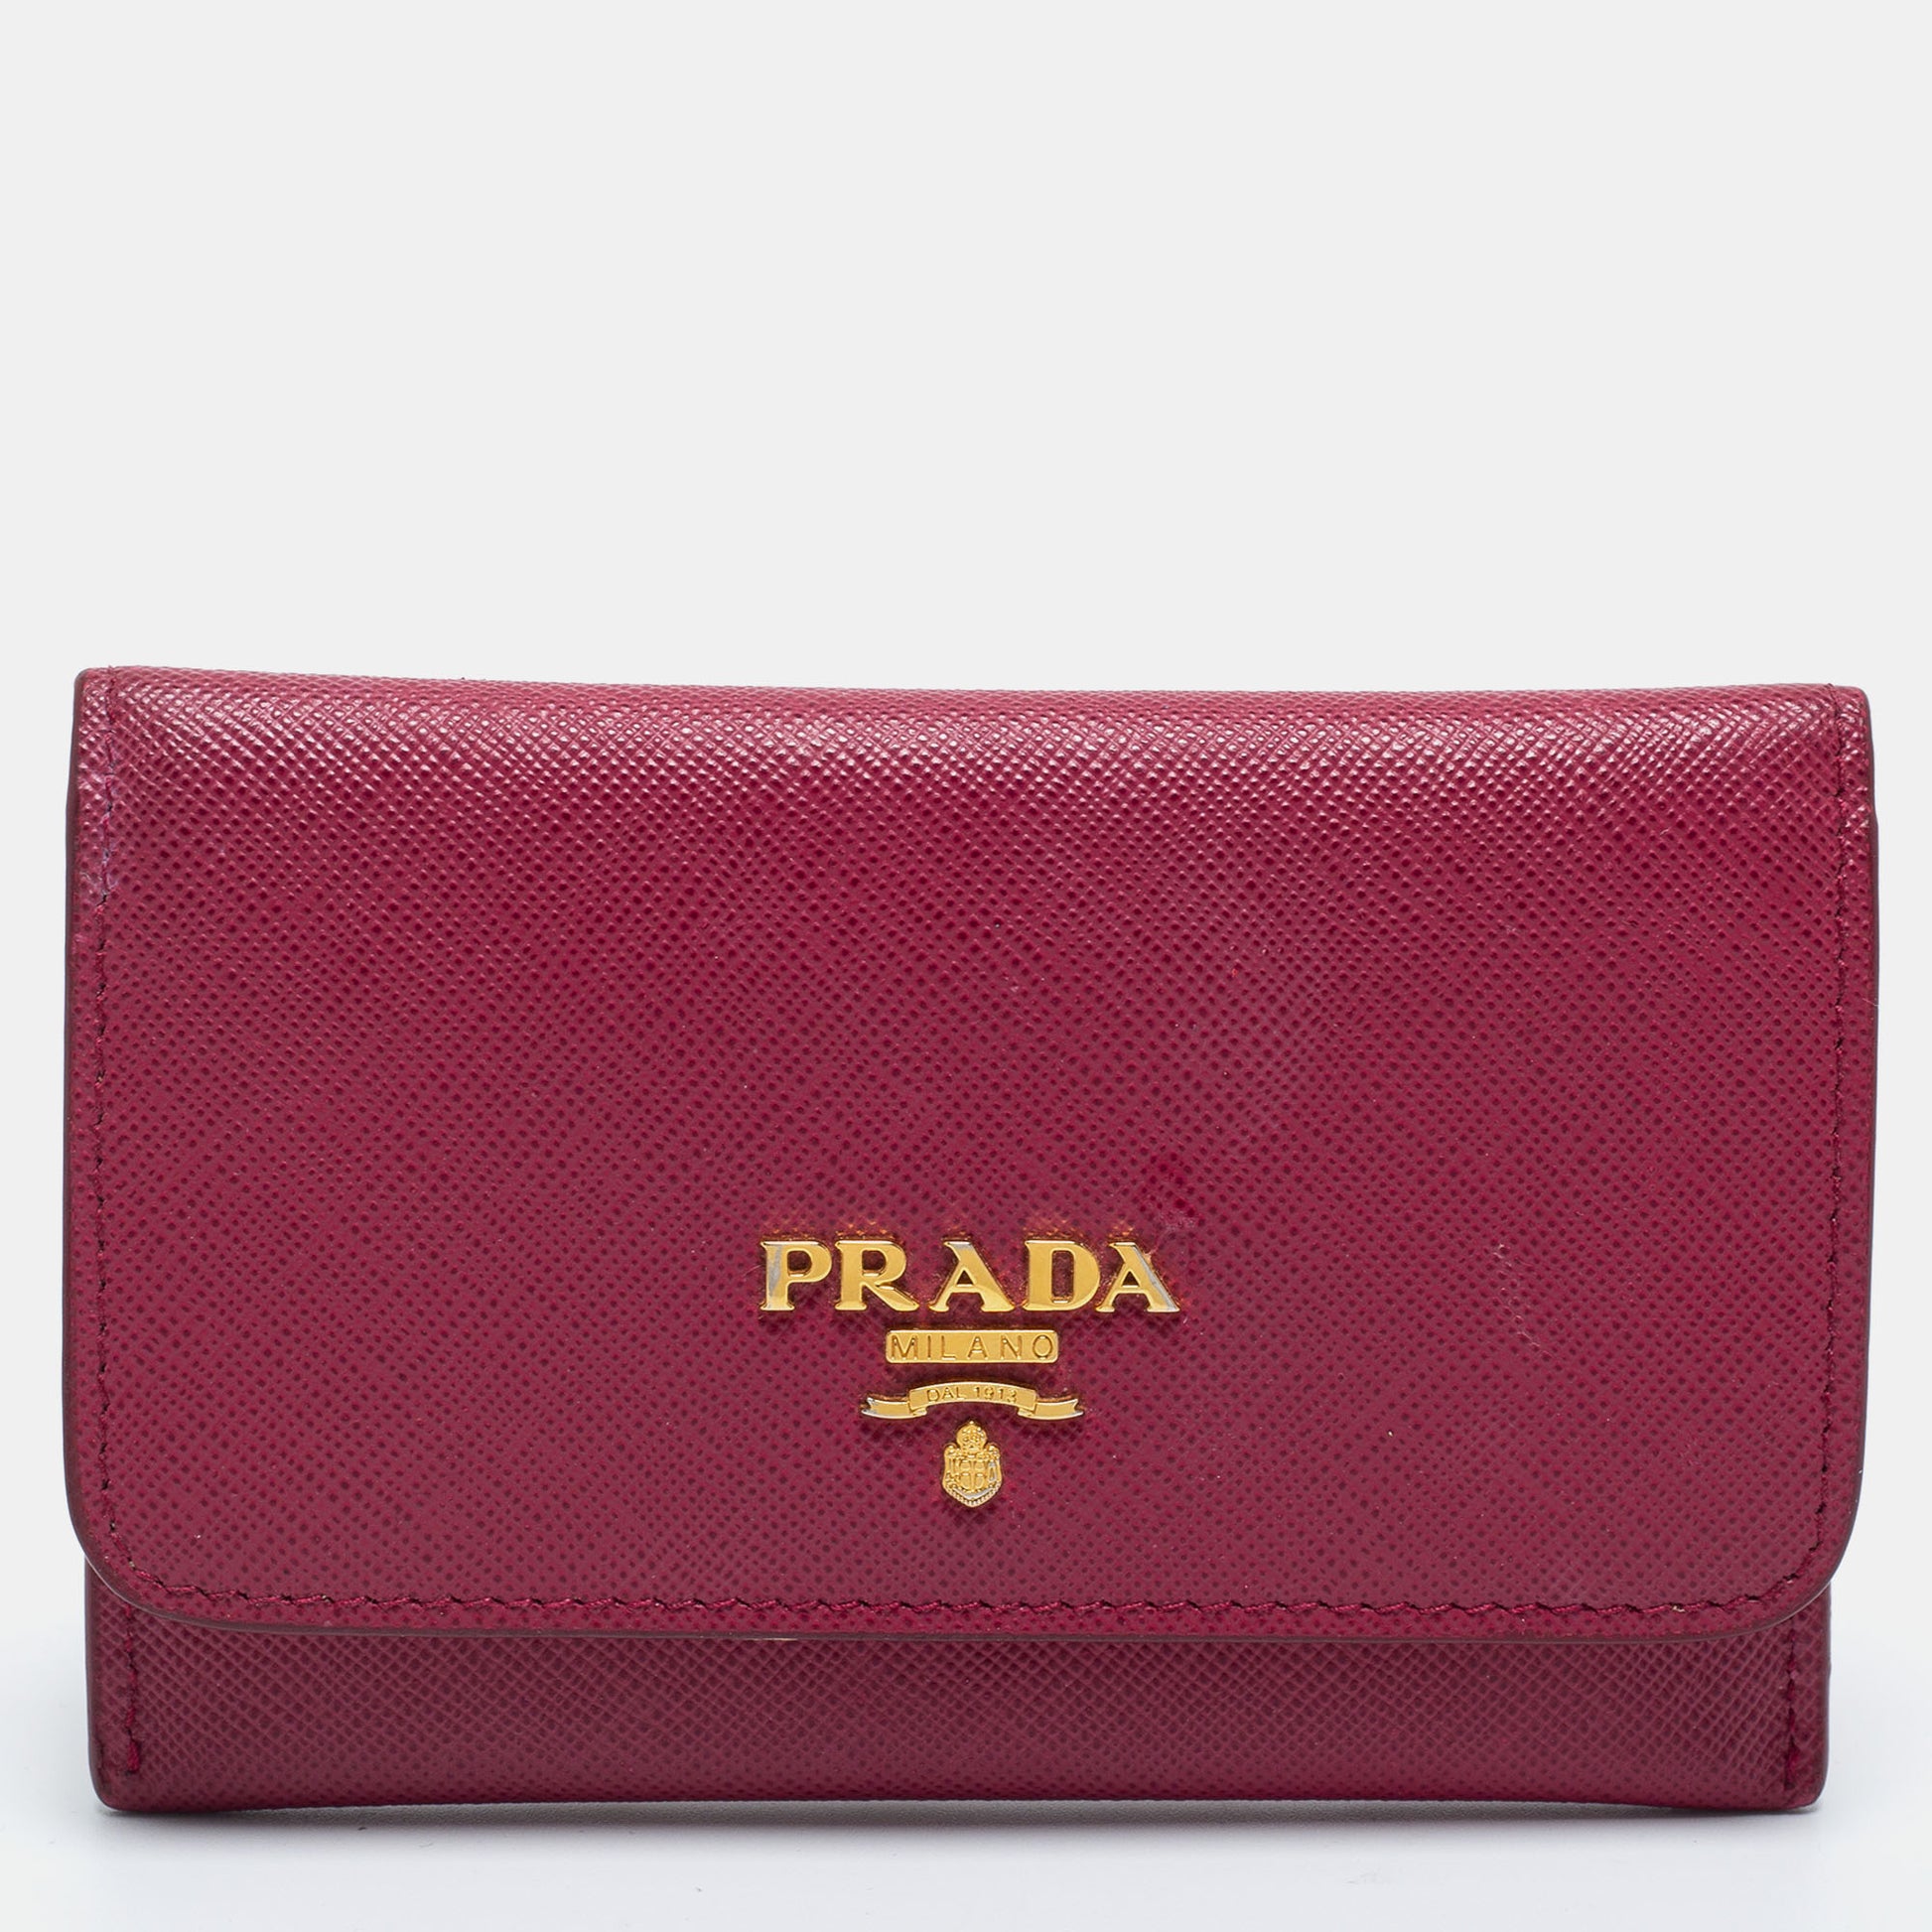 Prada Dark Pink Saffiano Leather Compact Wallet Prada